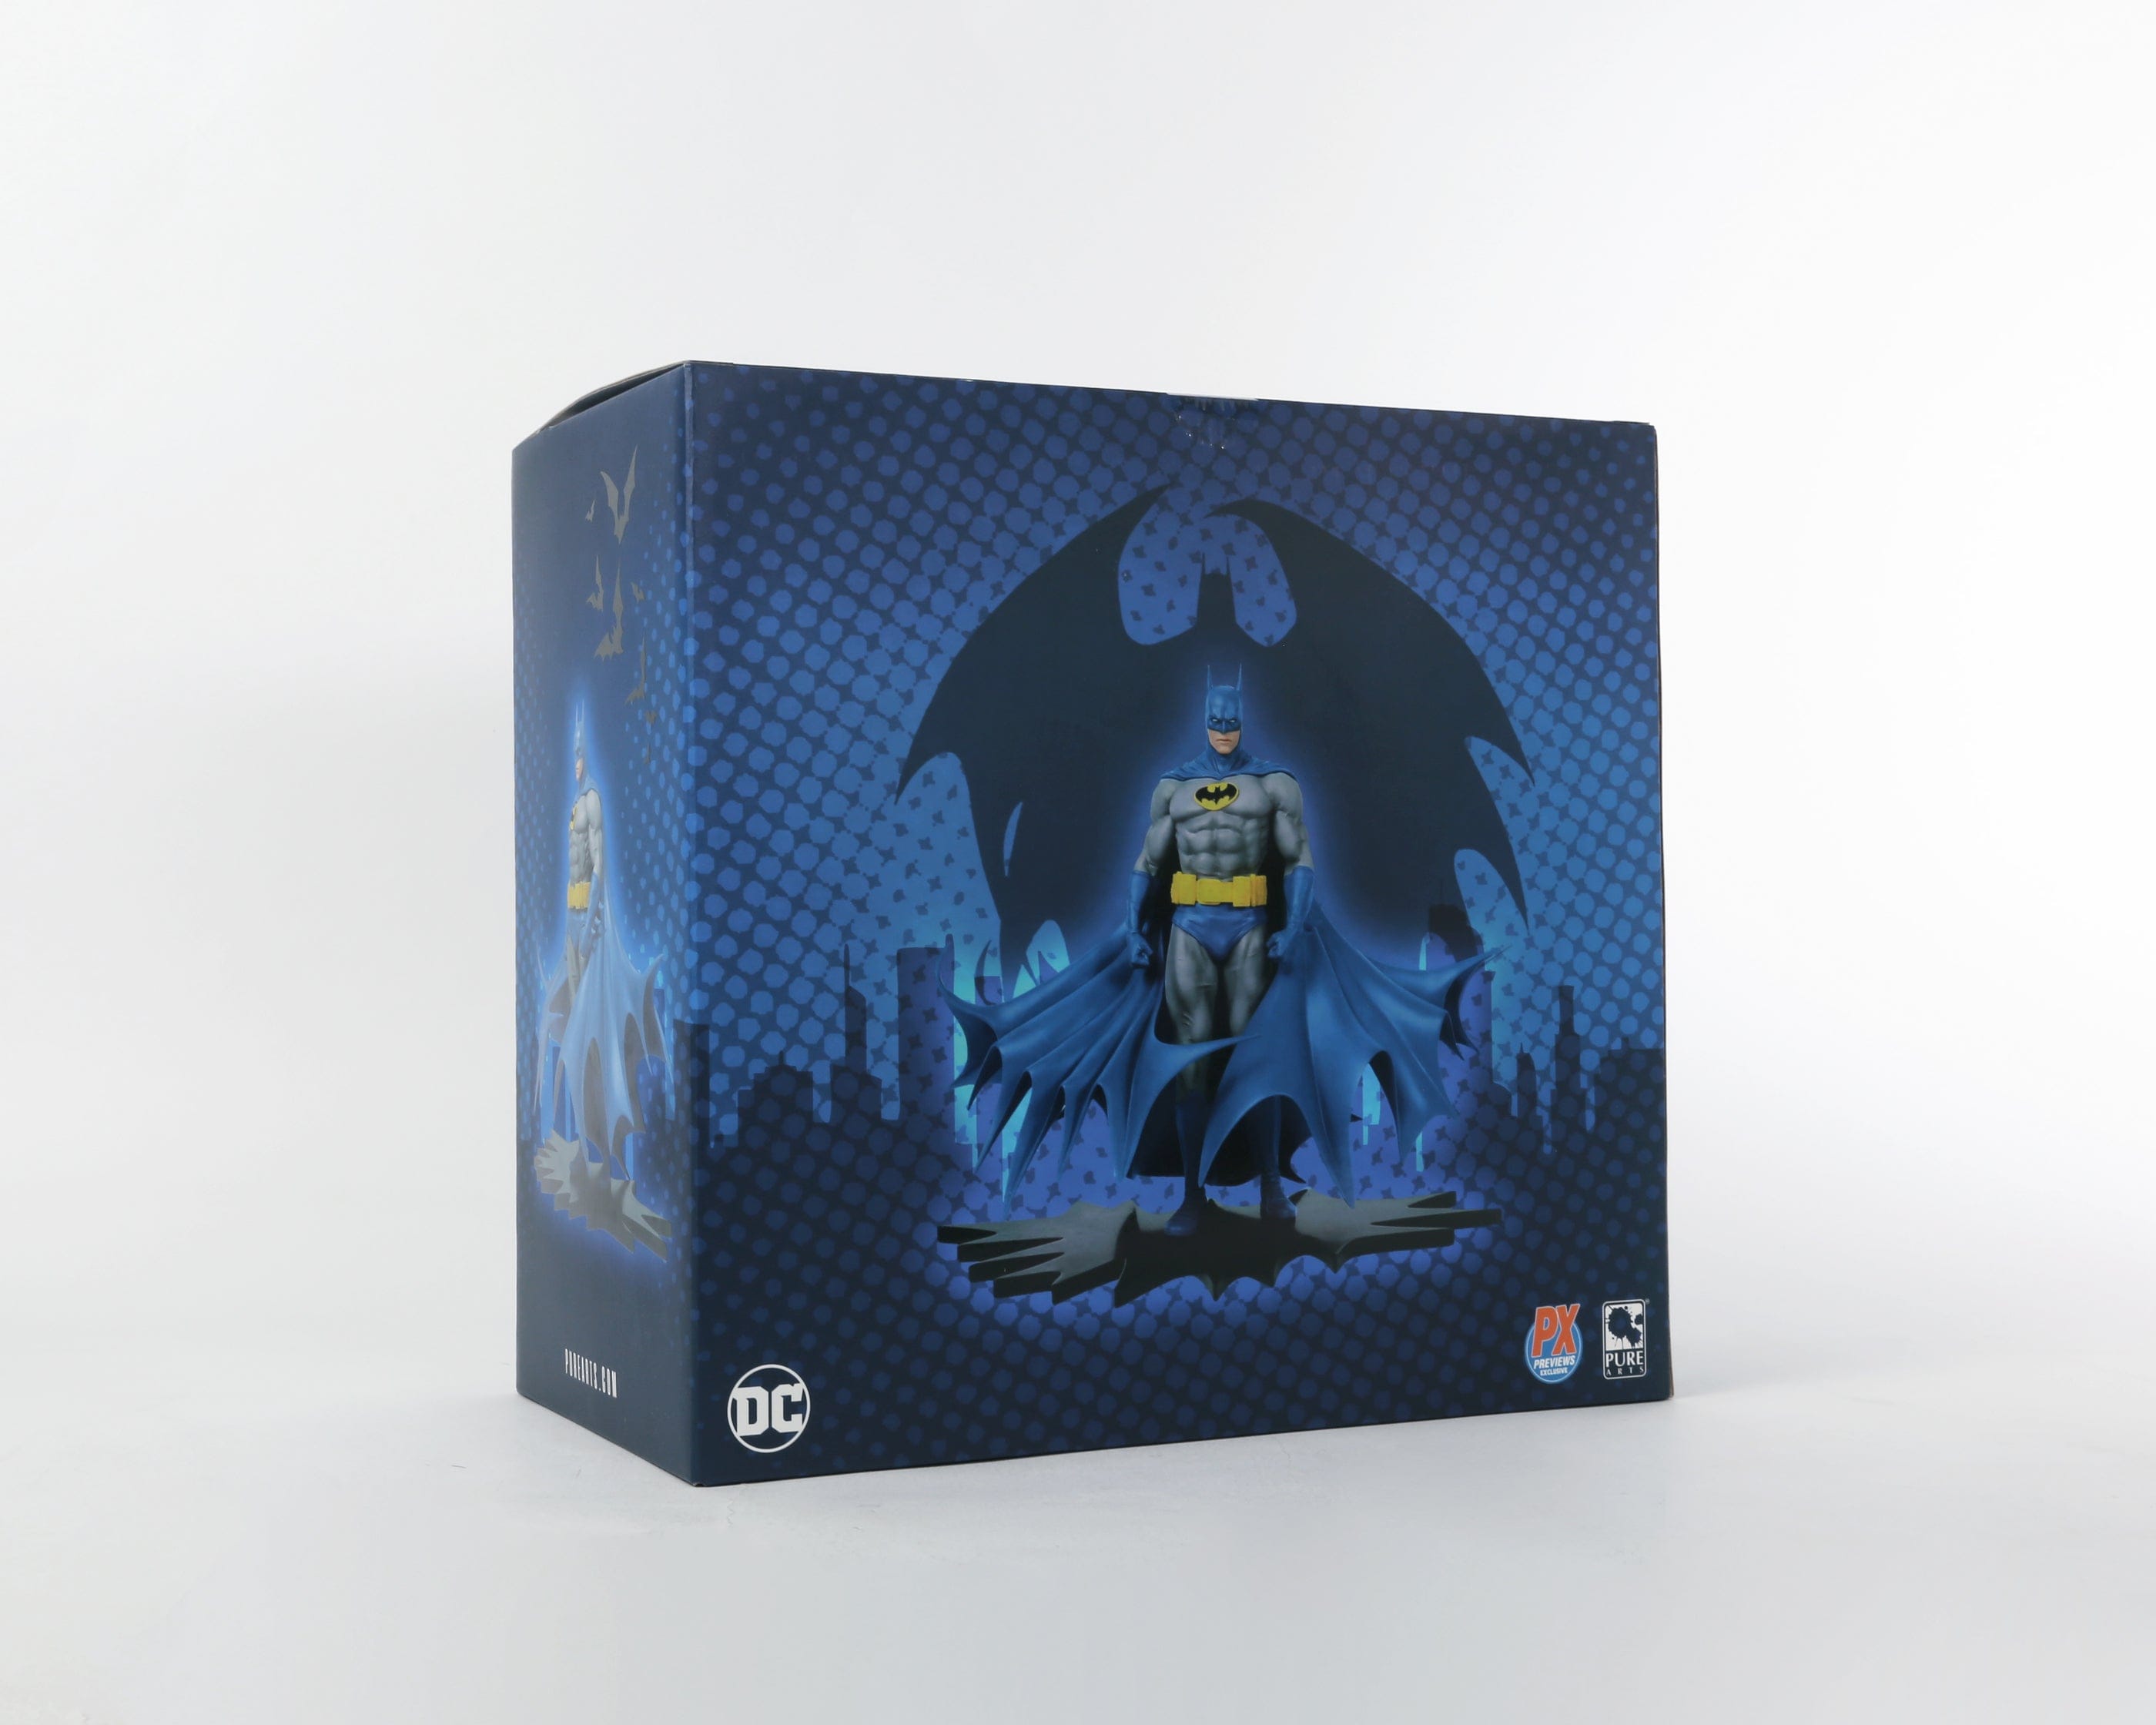 Pure Arts Limited DC Heroes Batman Classic Version 1:8 Scale Statue (Previews Exclusive)